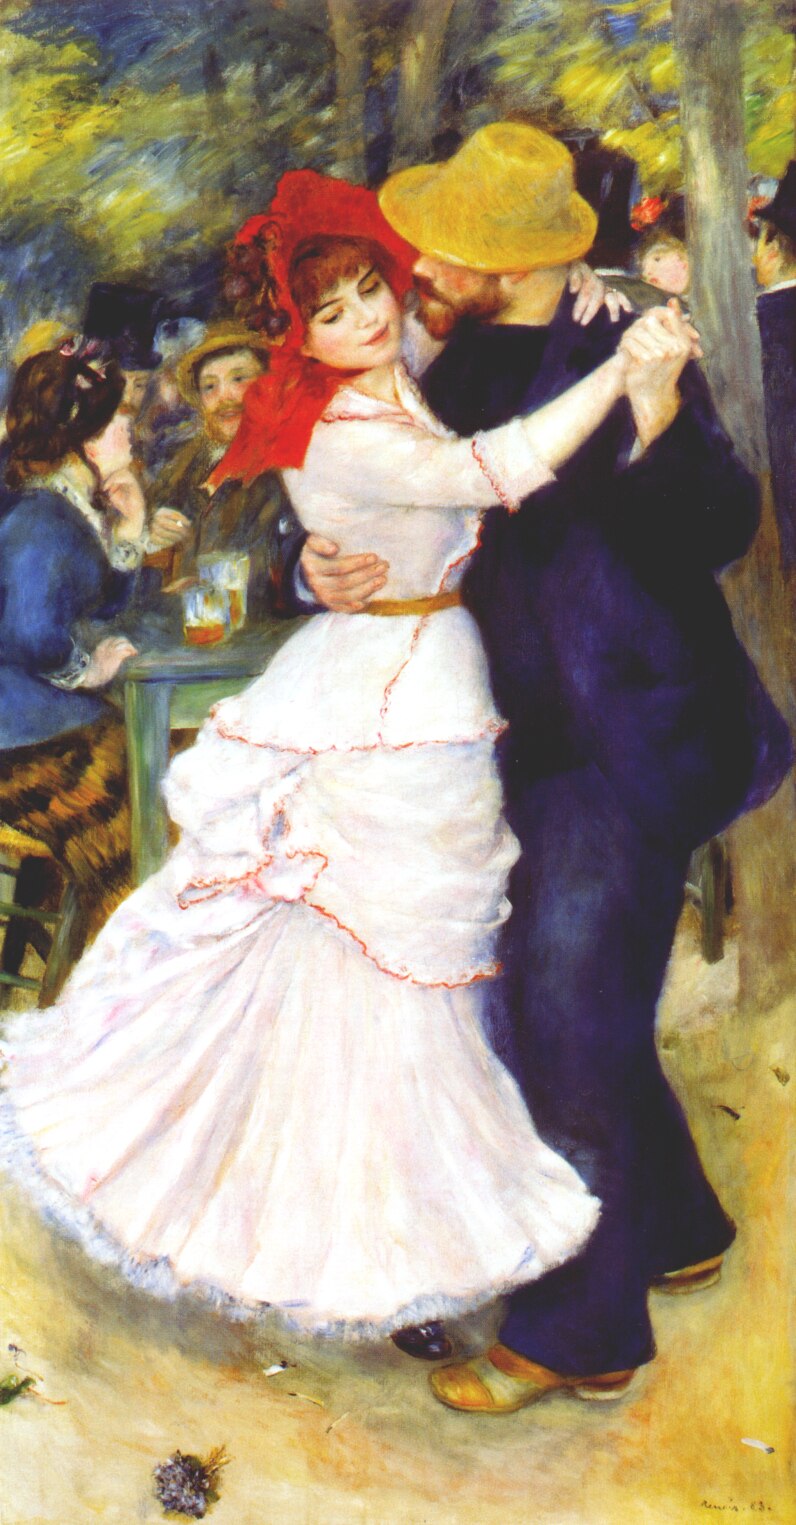 Dance at Bougival by Pierre-Auguste Renoir - 1883 - 98 x 182 cm Museum of Fine Arts Boston